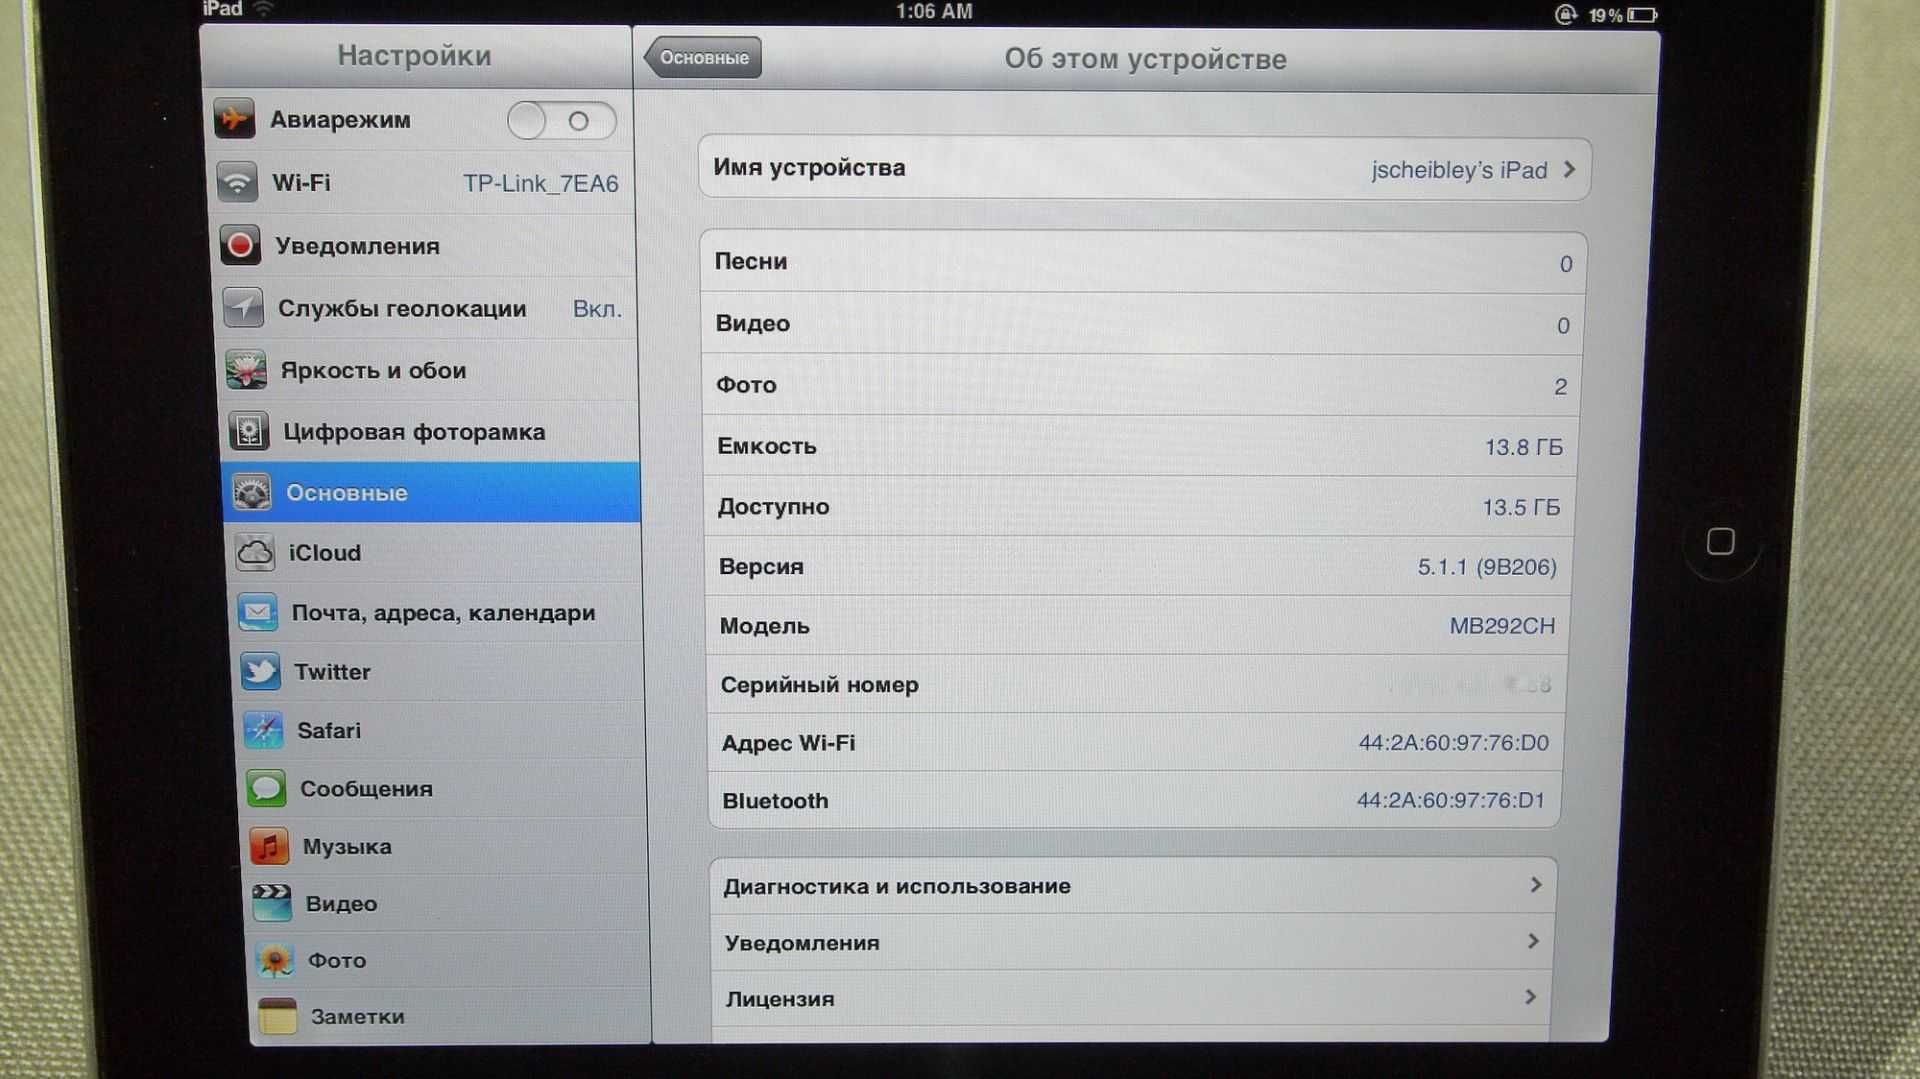 Планшет 16Gb Apple iPad 1 Wi-Fi - Model A1219 яркий IPS дисплей #10